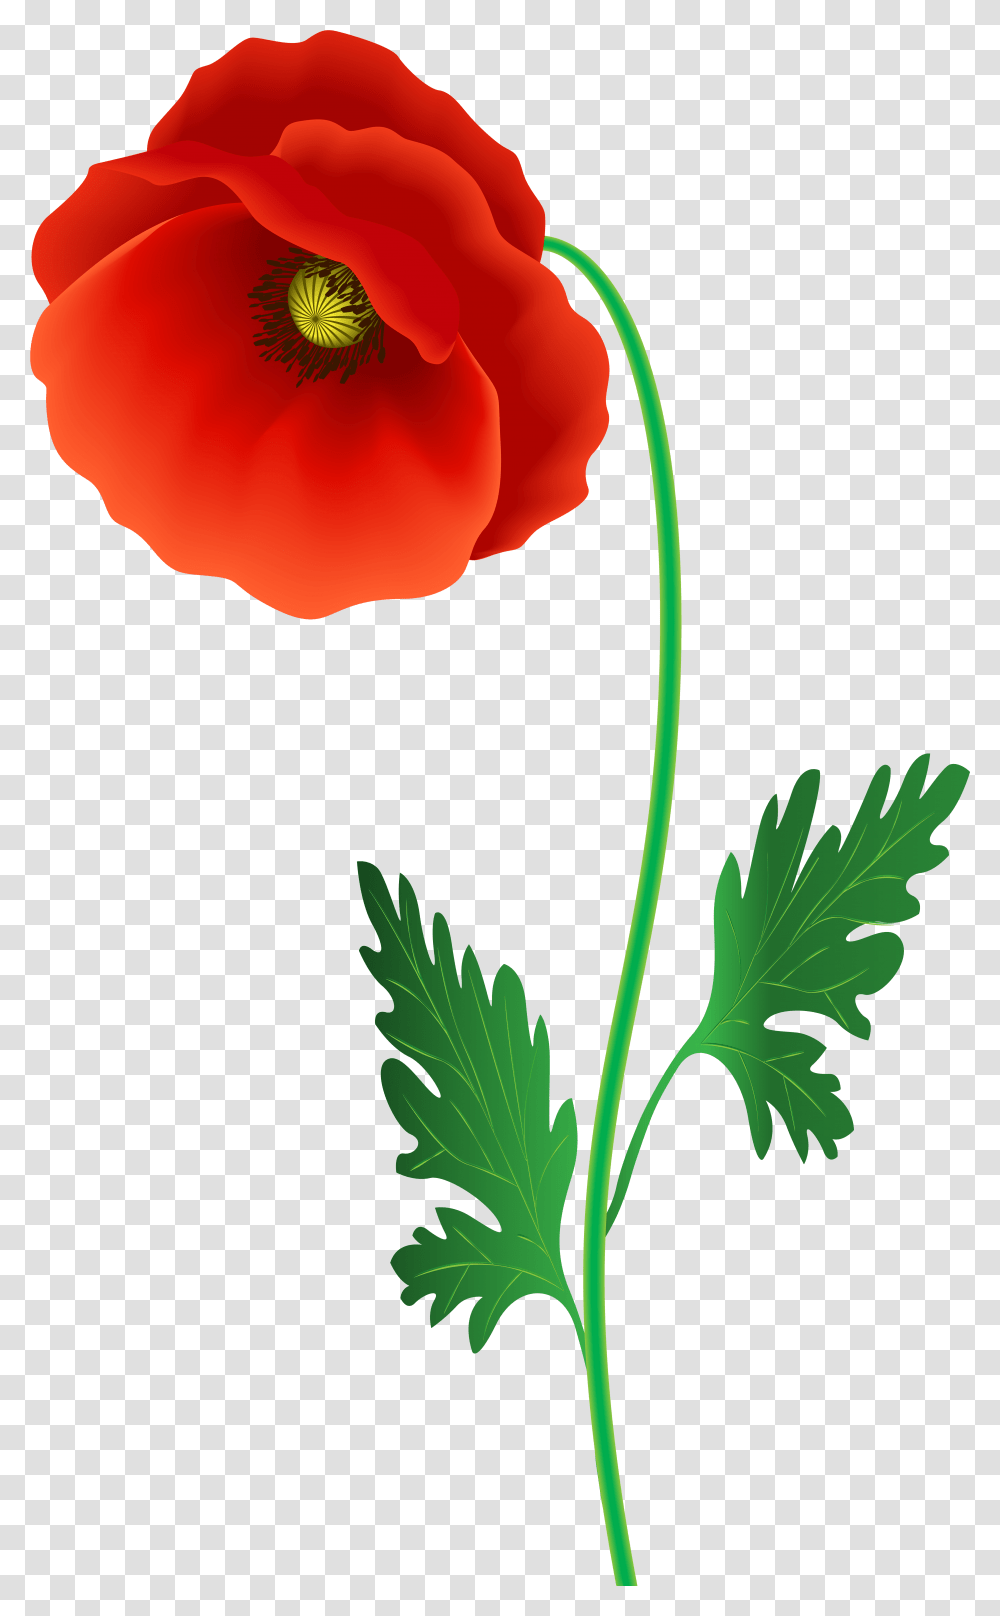 Download Free Poppy Flower Clipart Image Gallery Flowering Plant, Blossom, Petal, Vase, Jar Transparent Png